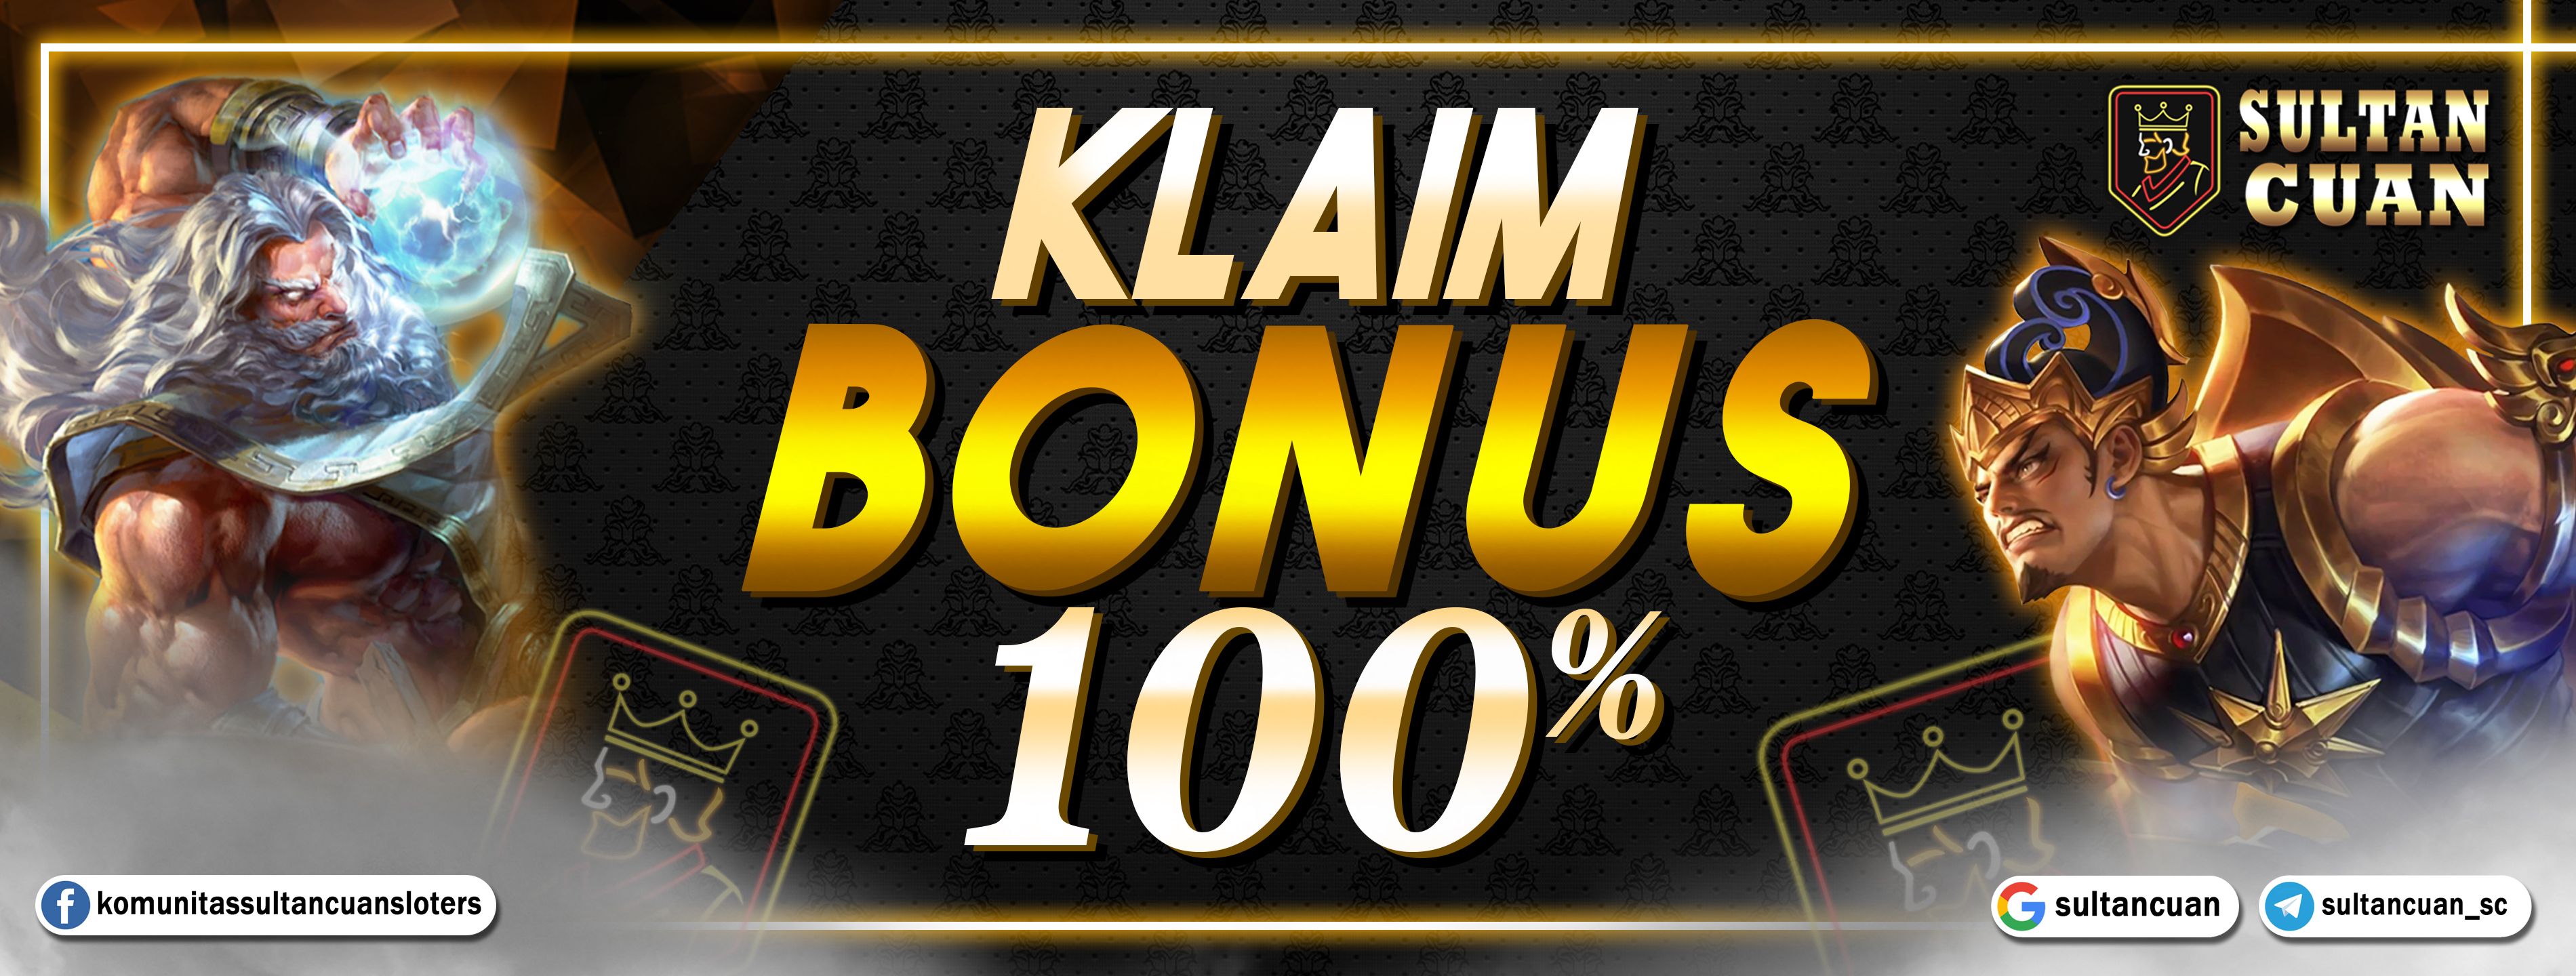 bonus 100%